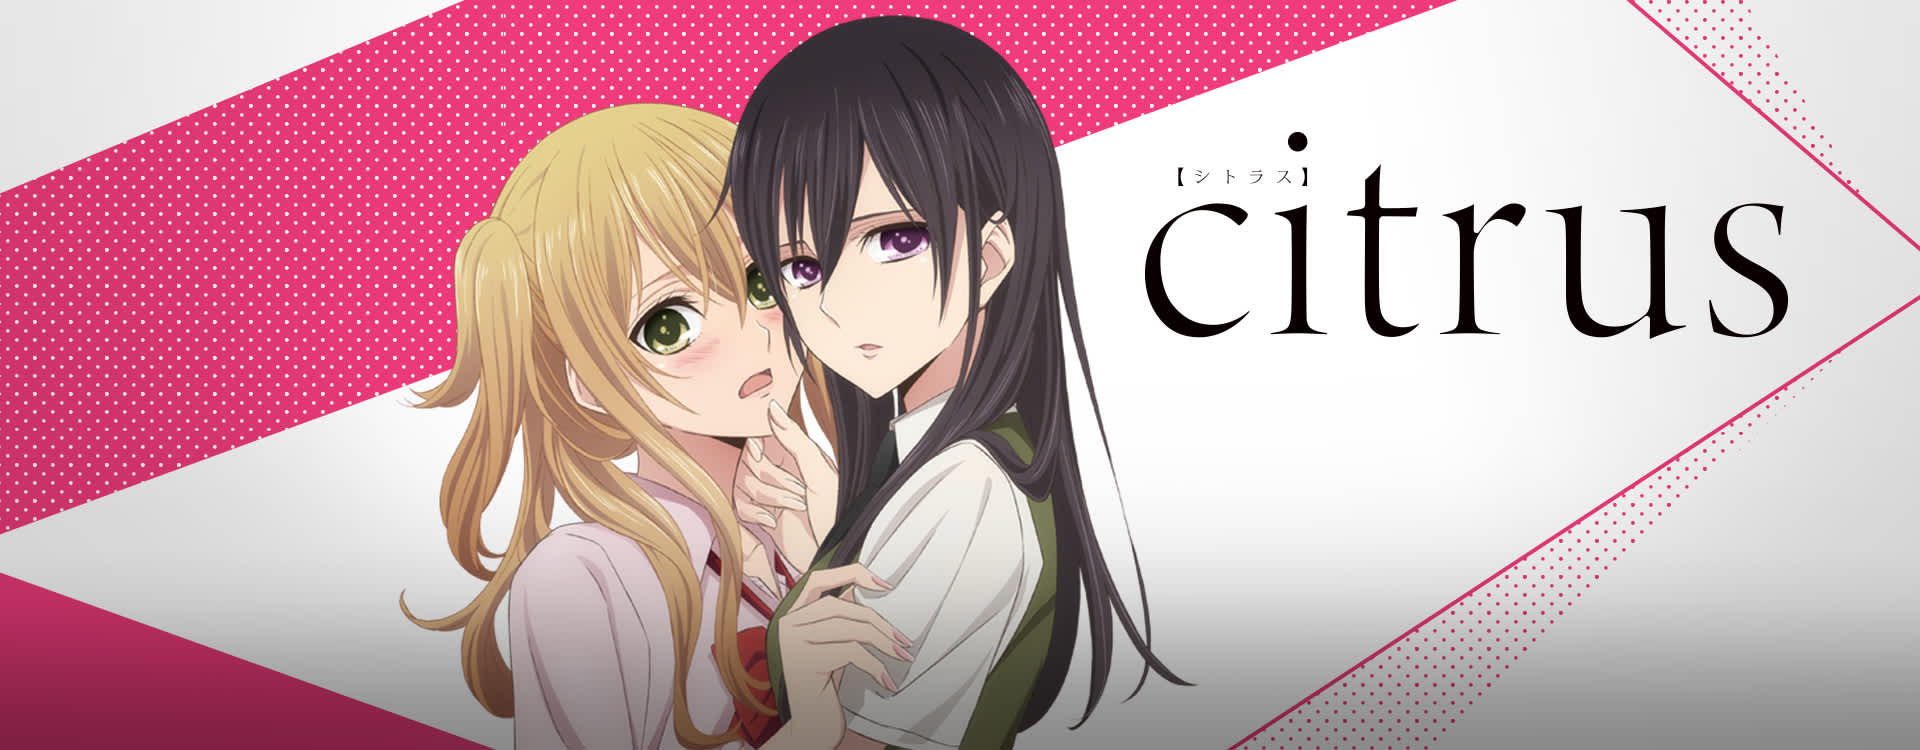 Citrus Animes 1st Promo Video Reveals Staff More Cast January Premiere   News  Anime News Network